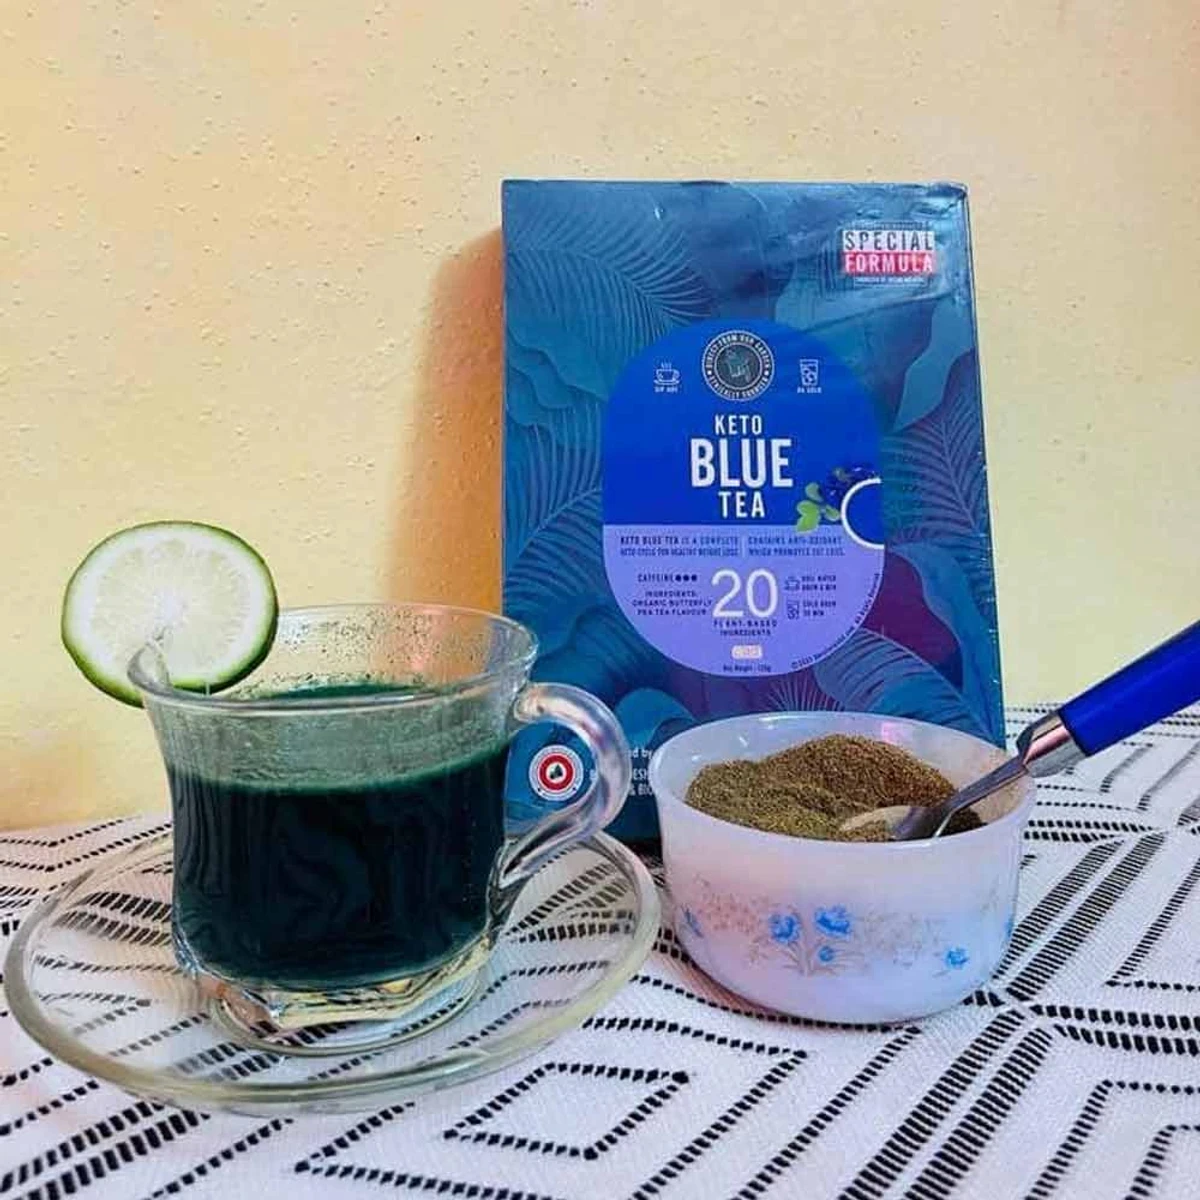 Keto Blue Tea তিন মাসের কোর্স (3 packet)